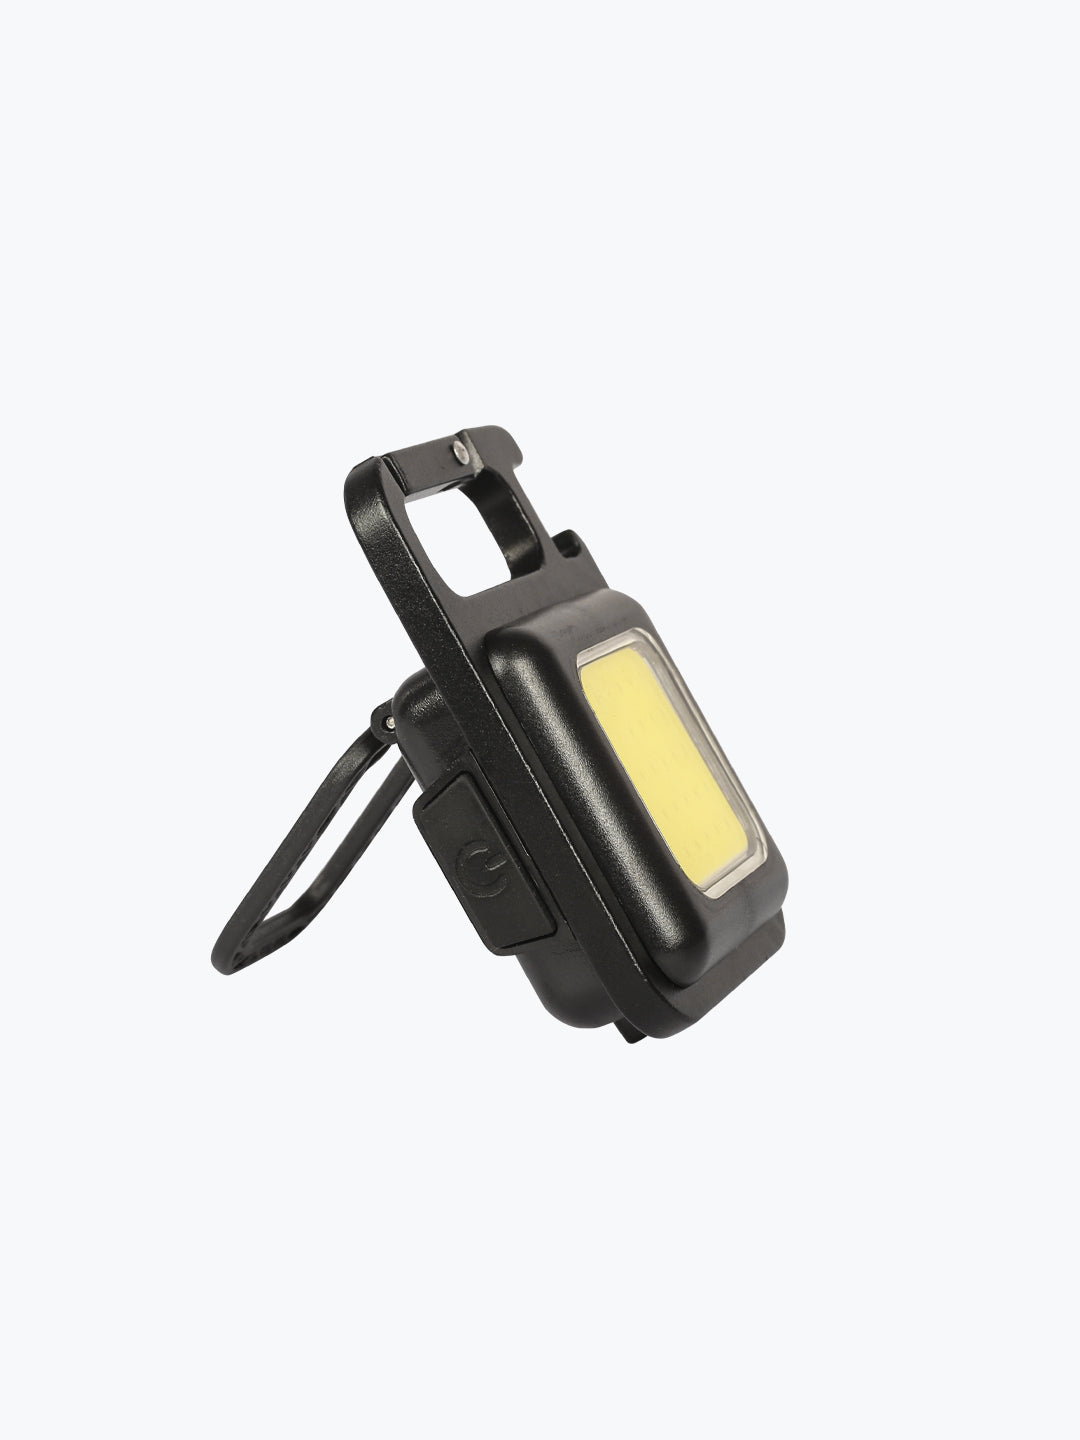 COB Keychain LED Flash